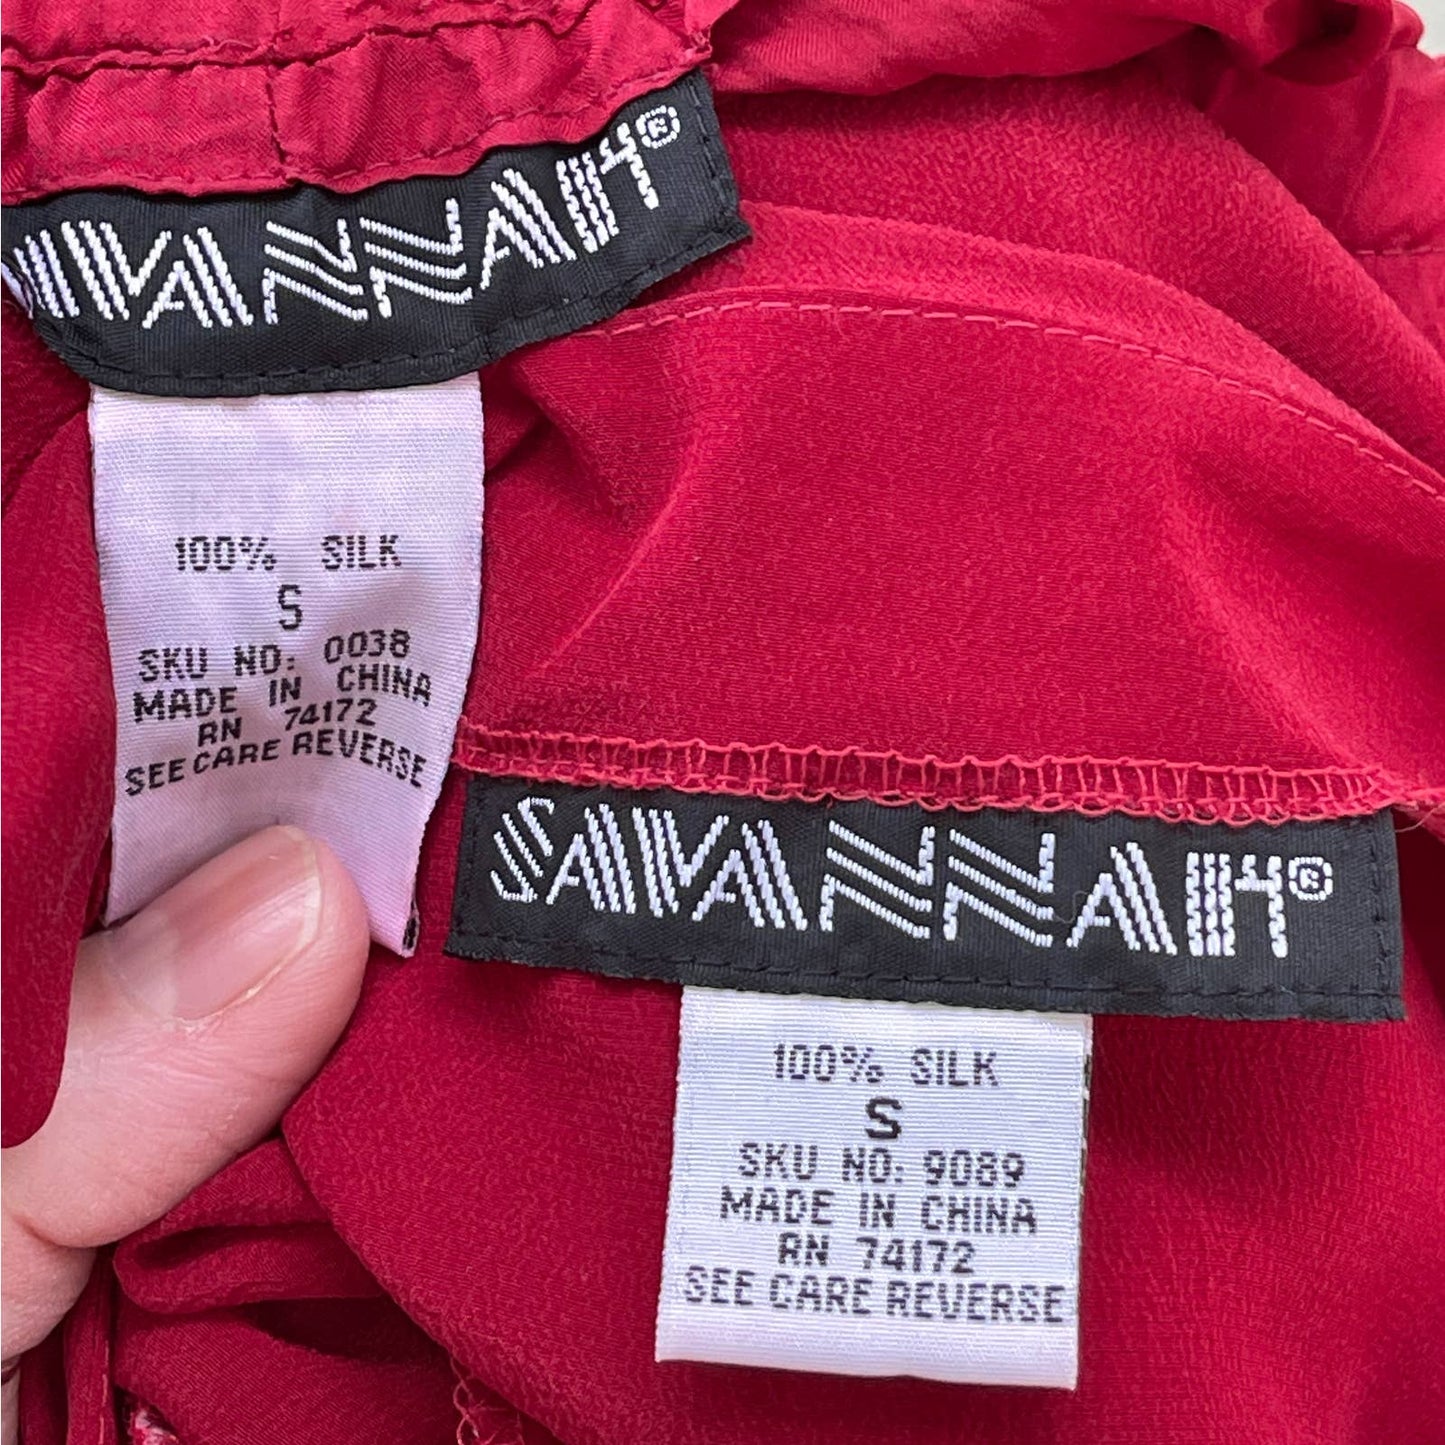 Vintage 90s Red Silk Crinkle Skirt Set Blouse Long Sleeve Maxi Savannah Size S